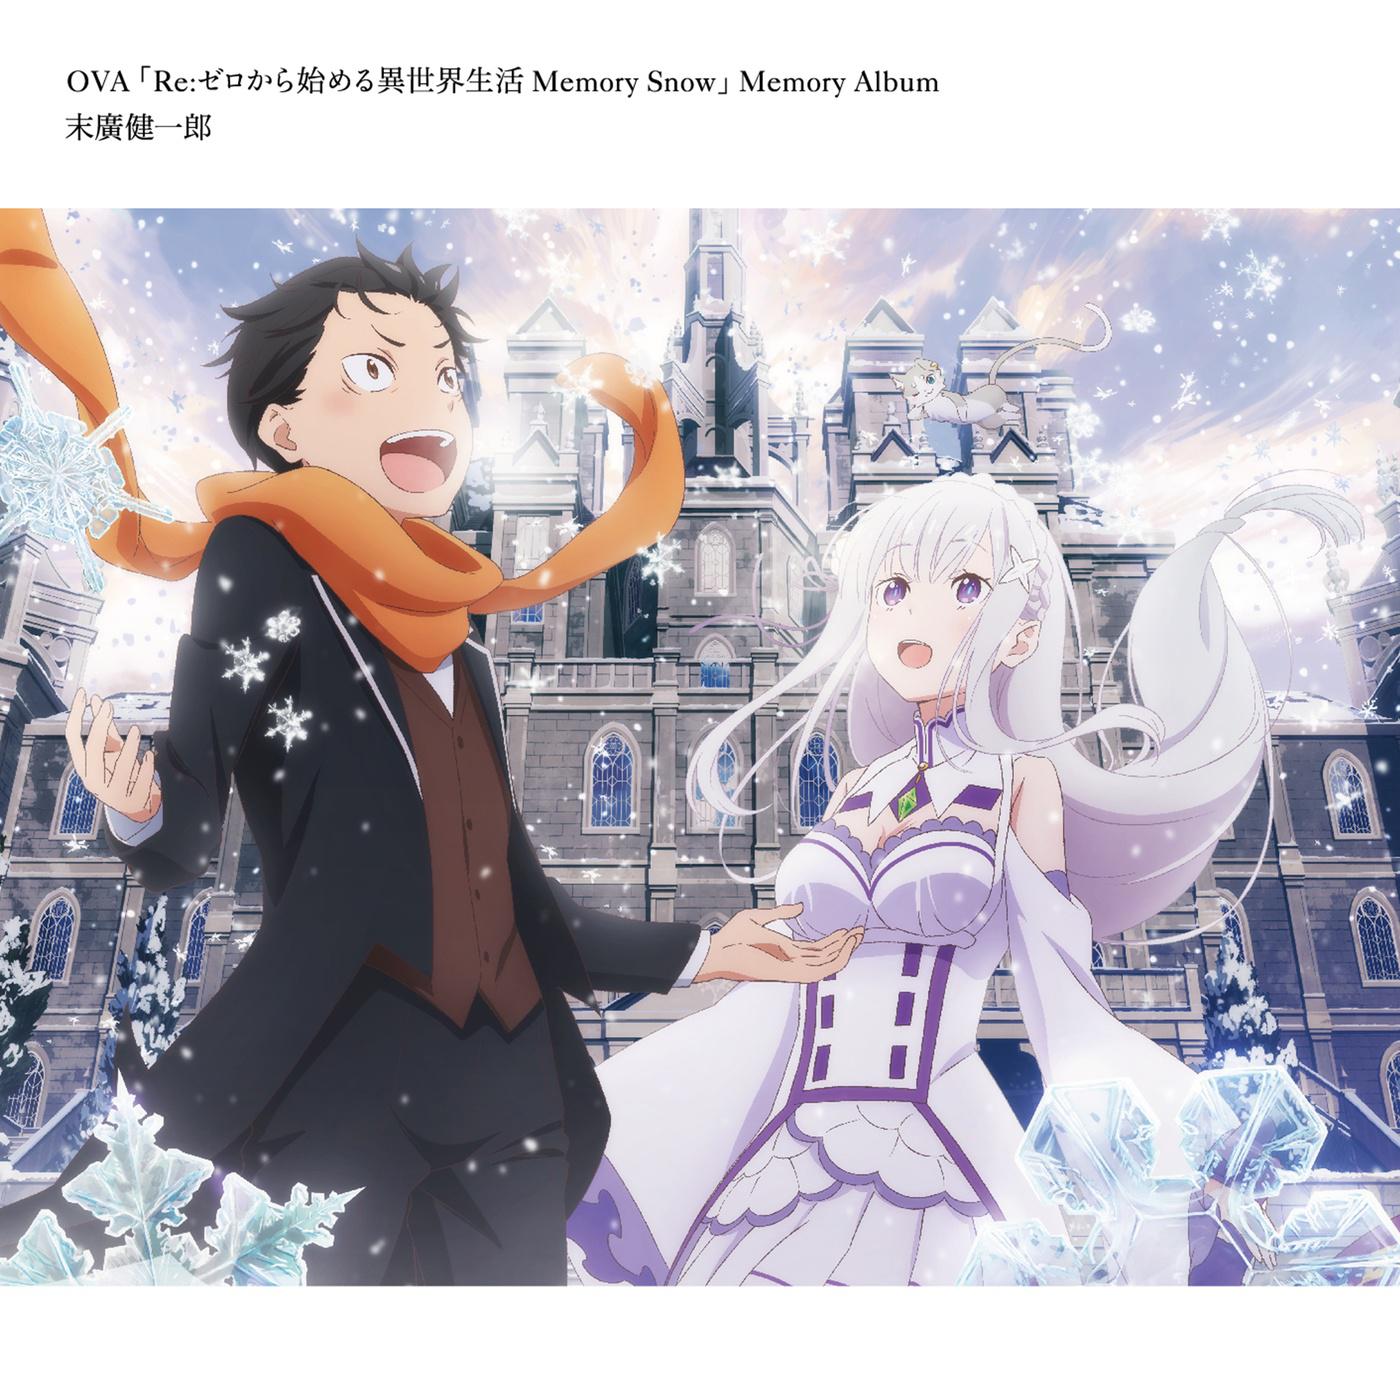 White White Snow歌词 歌手nonoc-专辑OVA「Re:ゼロから始める異世界生活 Memory Snow」Memory Album-单曲《White White Snow》LRC歌词下载